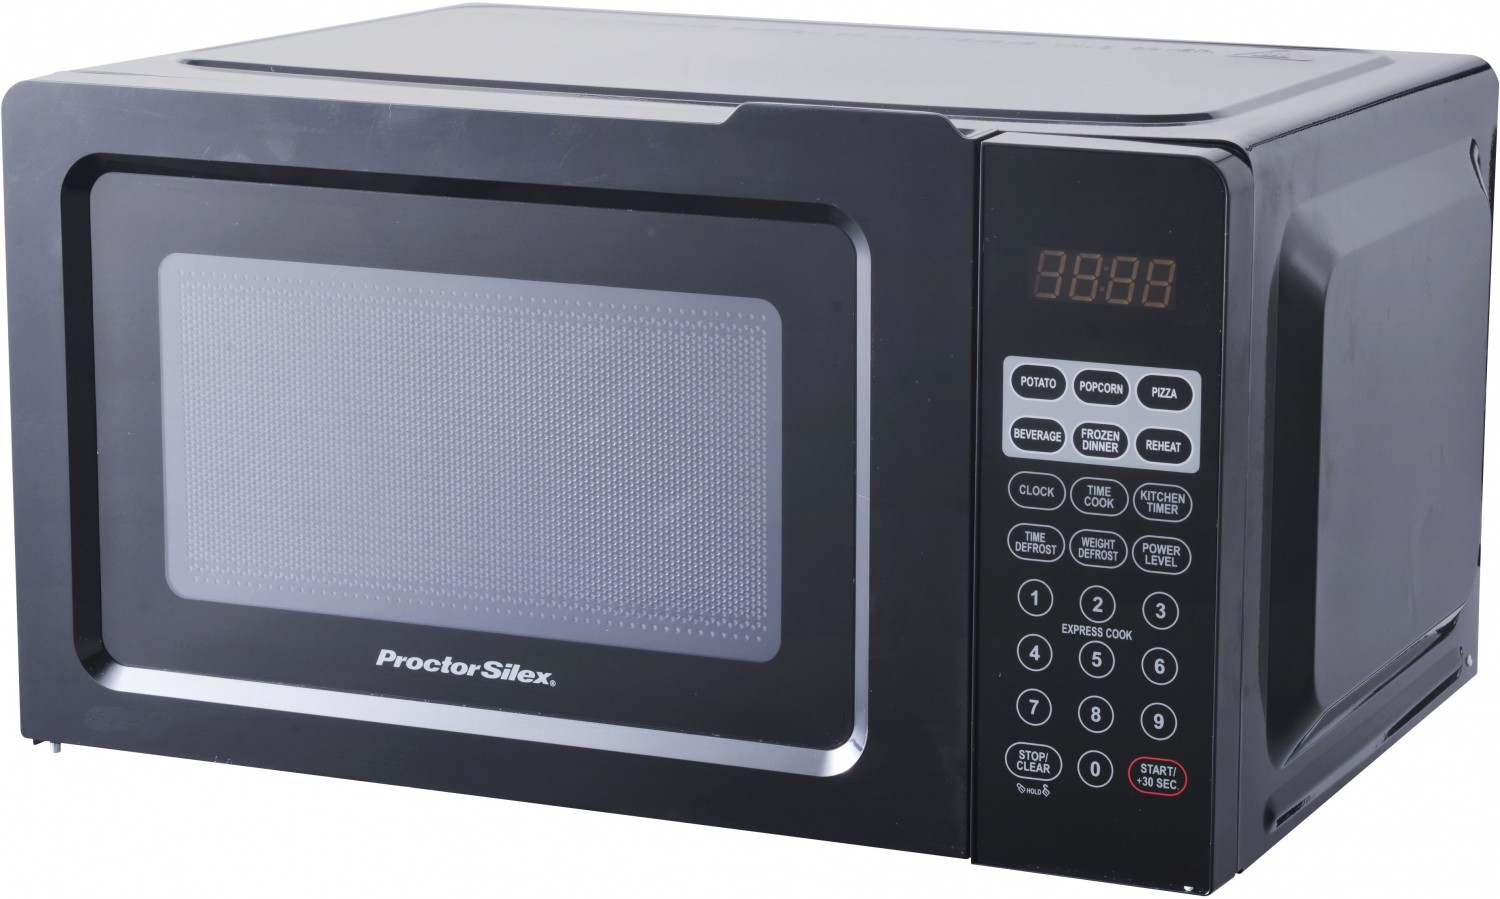 New quality 700 watt 0 7 cu ft digital microwave